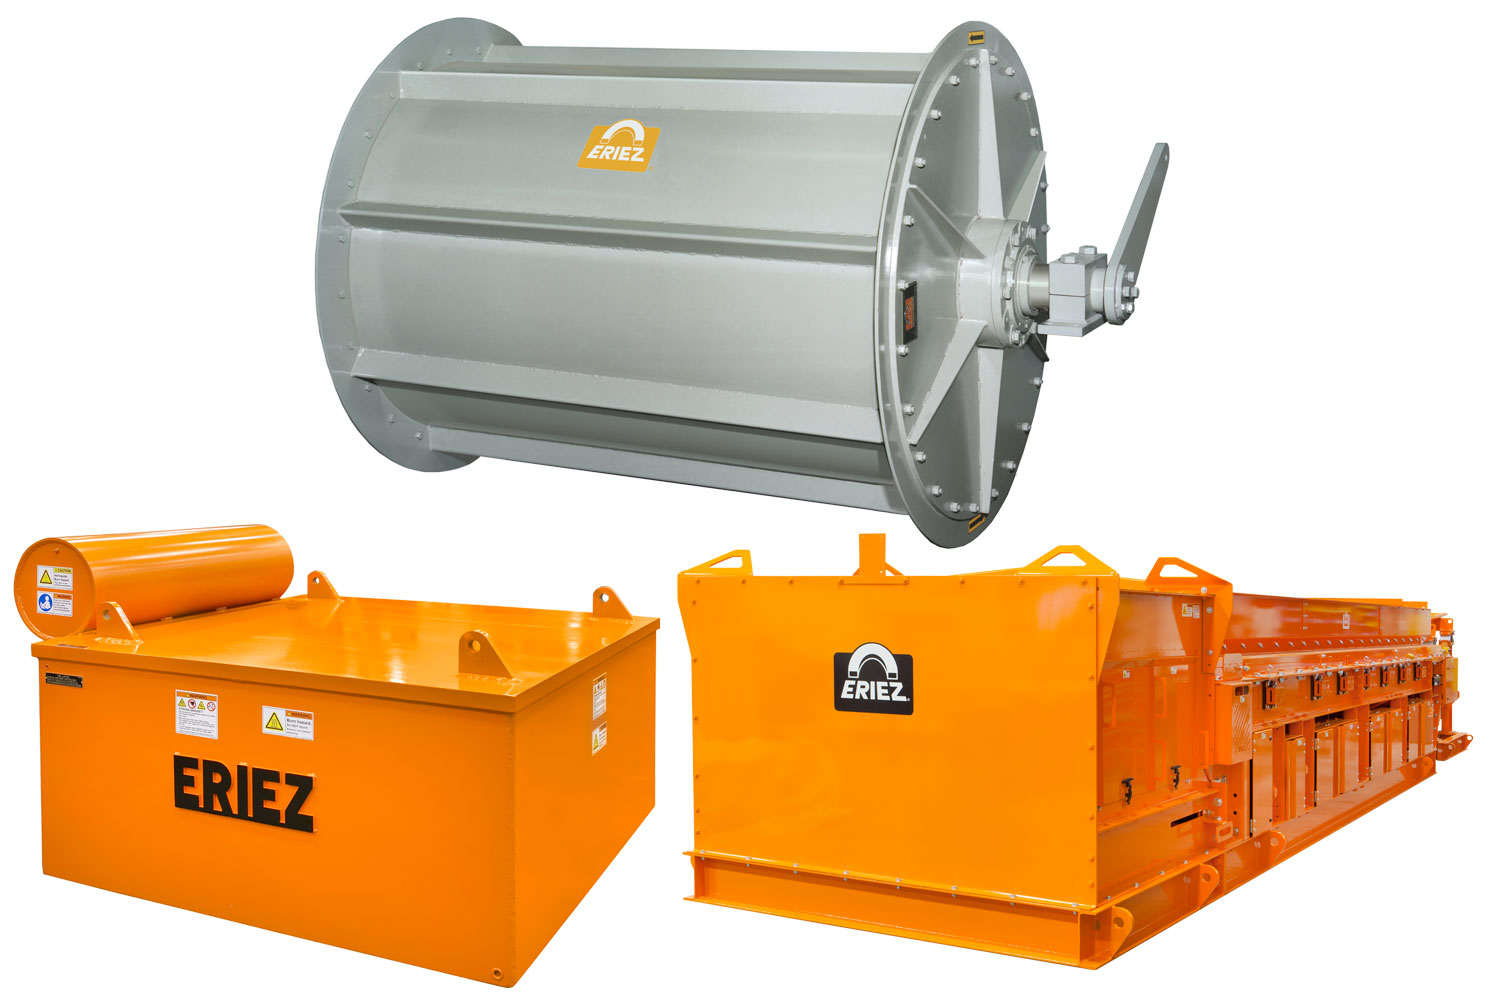 Eriez offers a range of refurbished equipment.